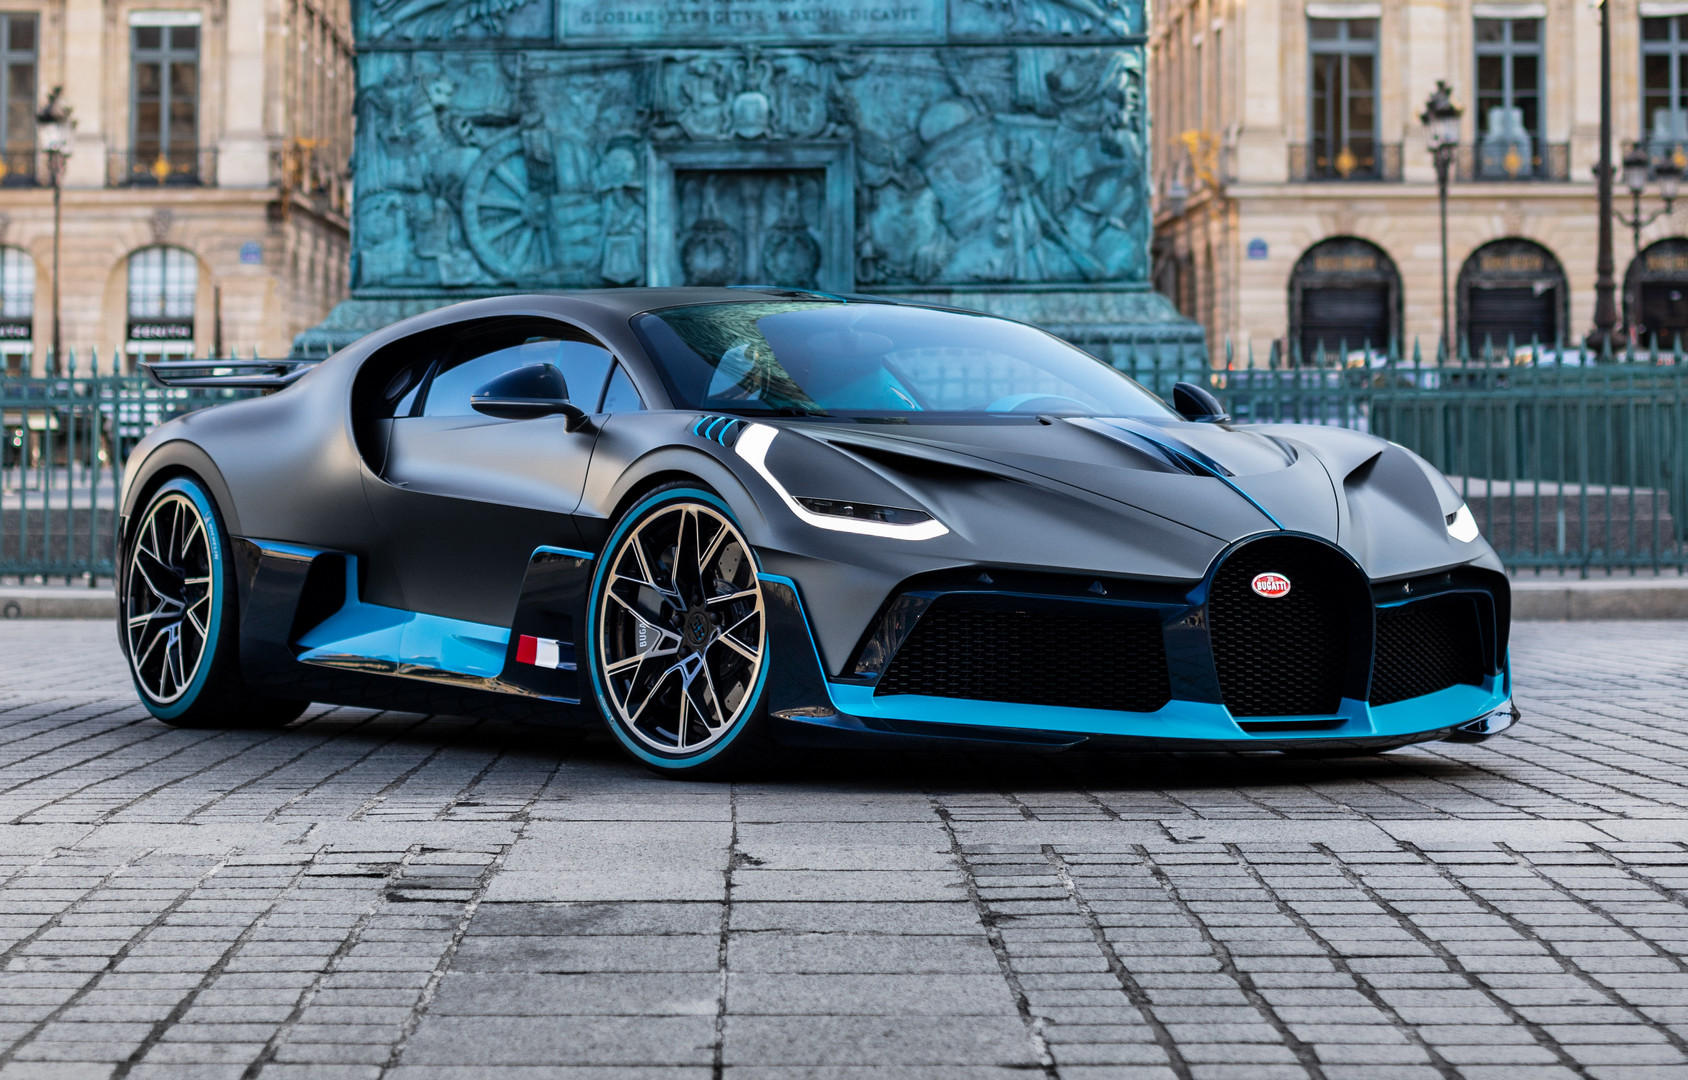 Bugatti To Reveal New Models In 2019 Denies Suv Rumors Gtspirit